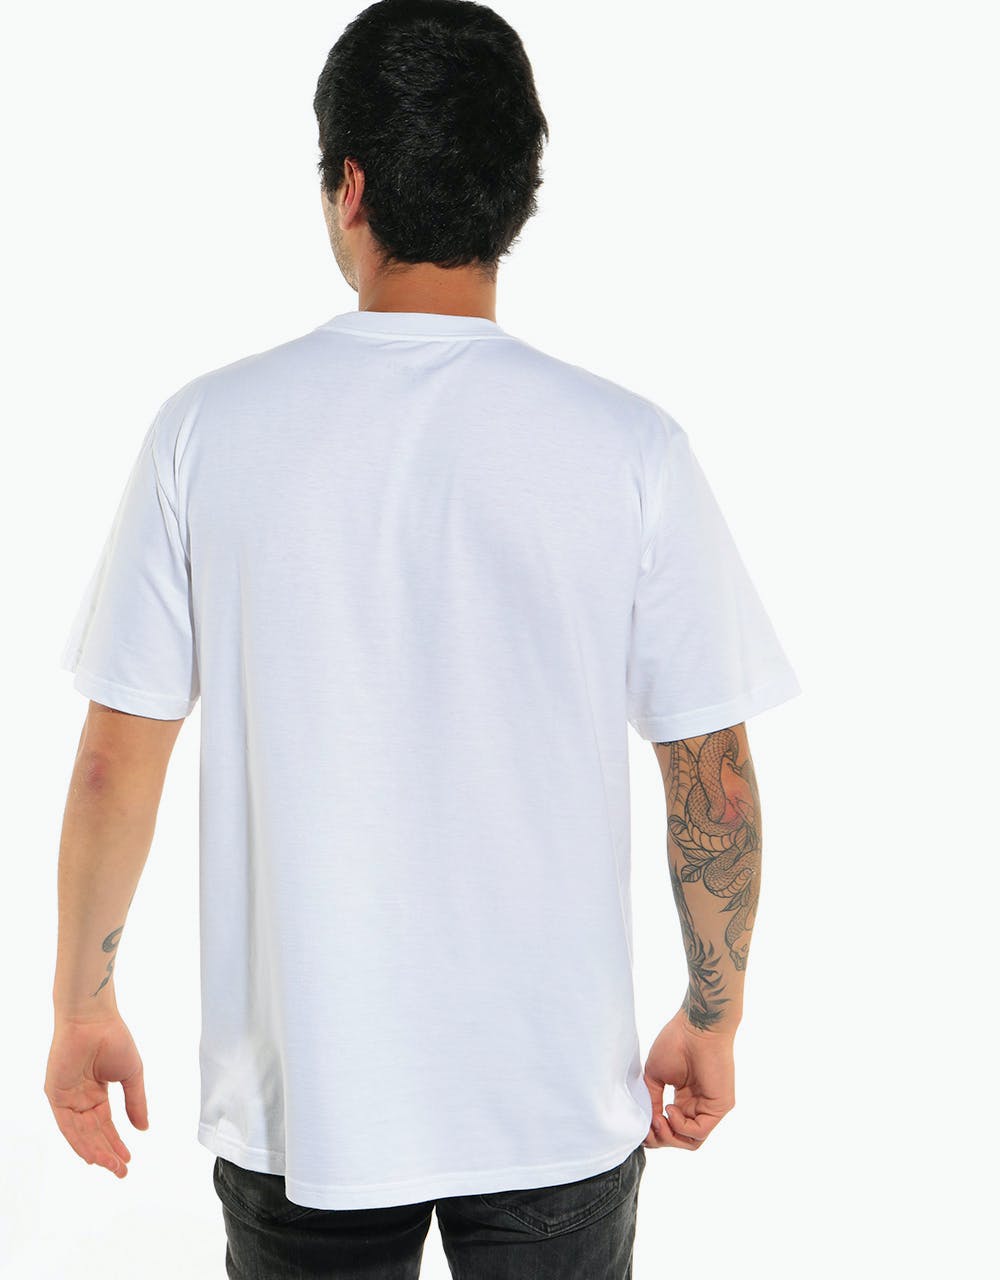 Carhartt WIP S/S Fading Script T-Shirt - White/Pop Coral